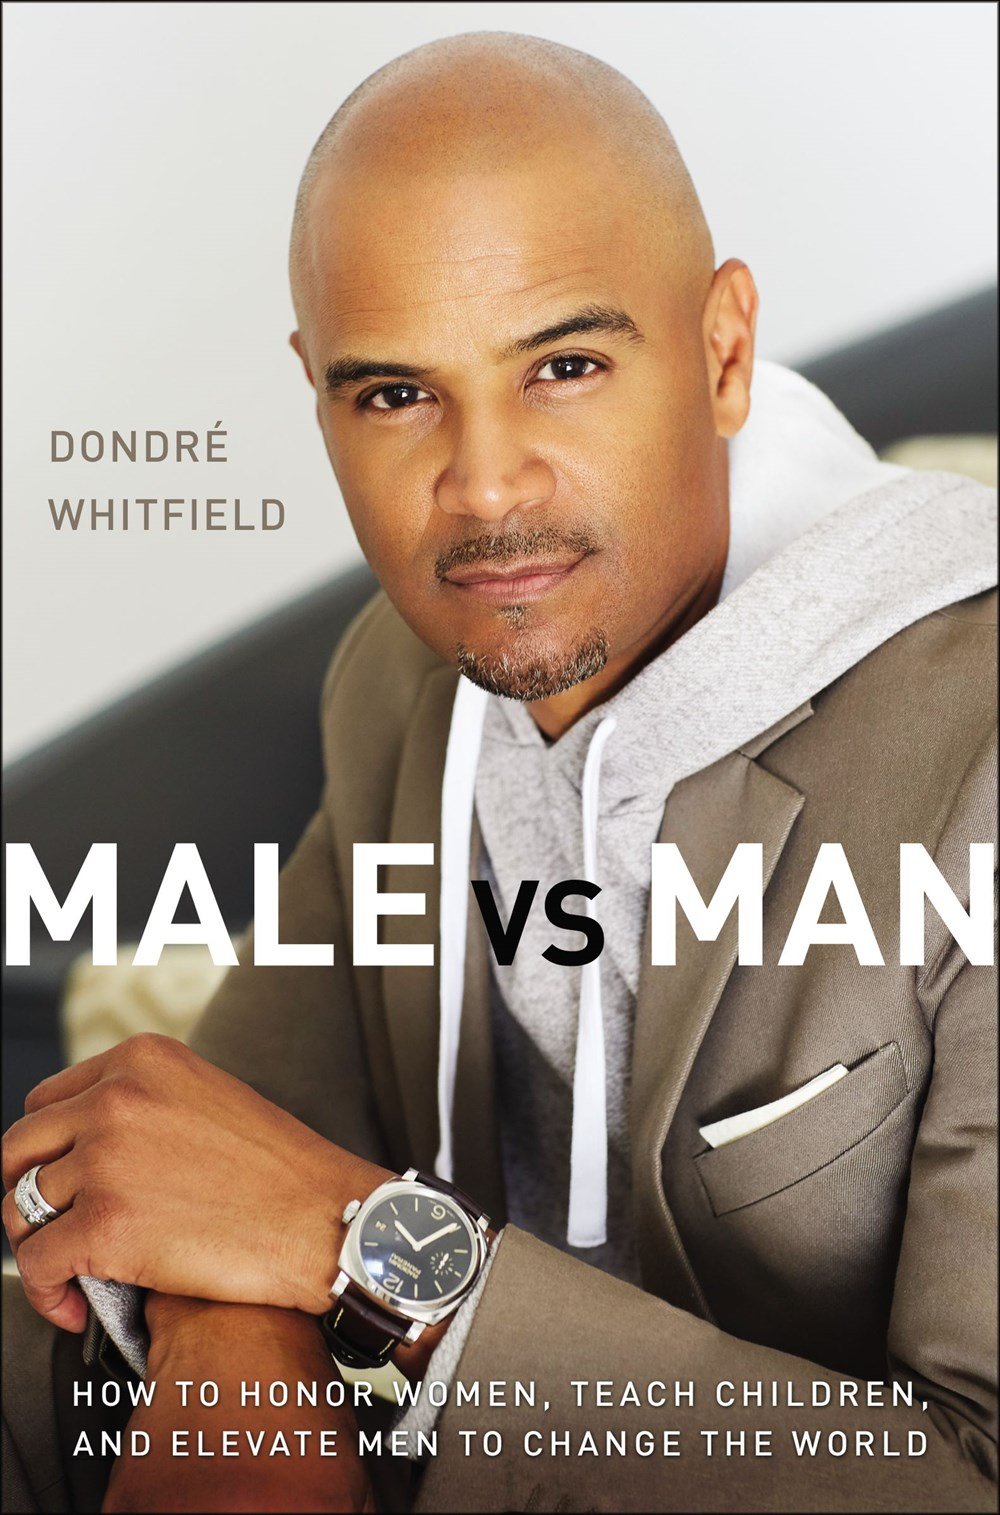 Male vs. Man